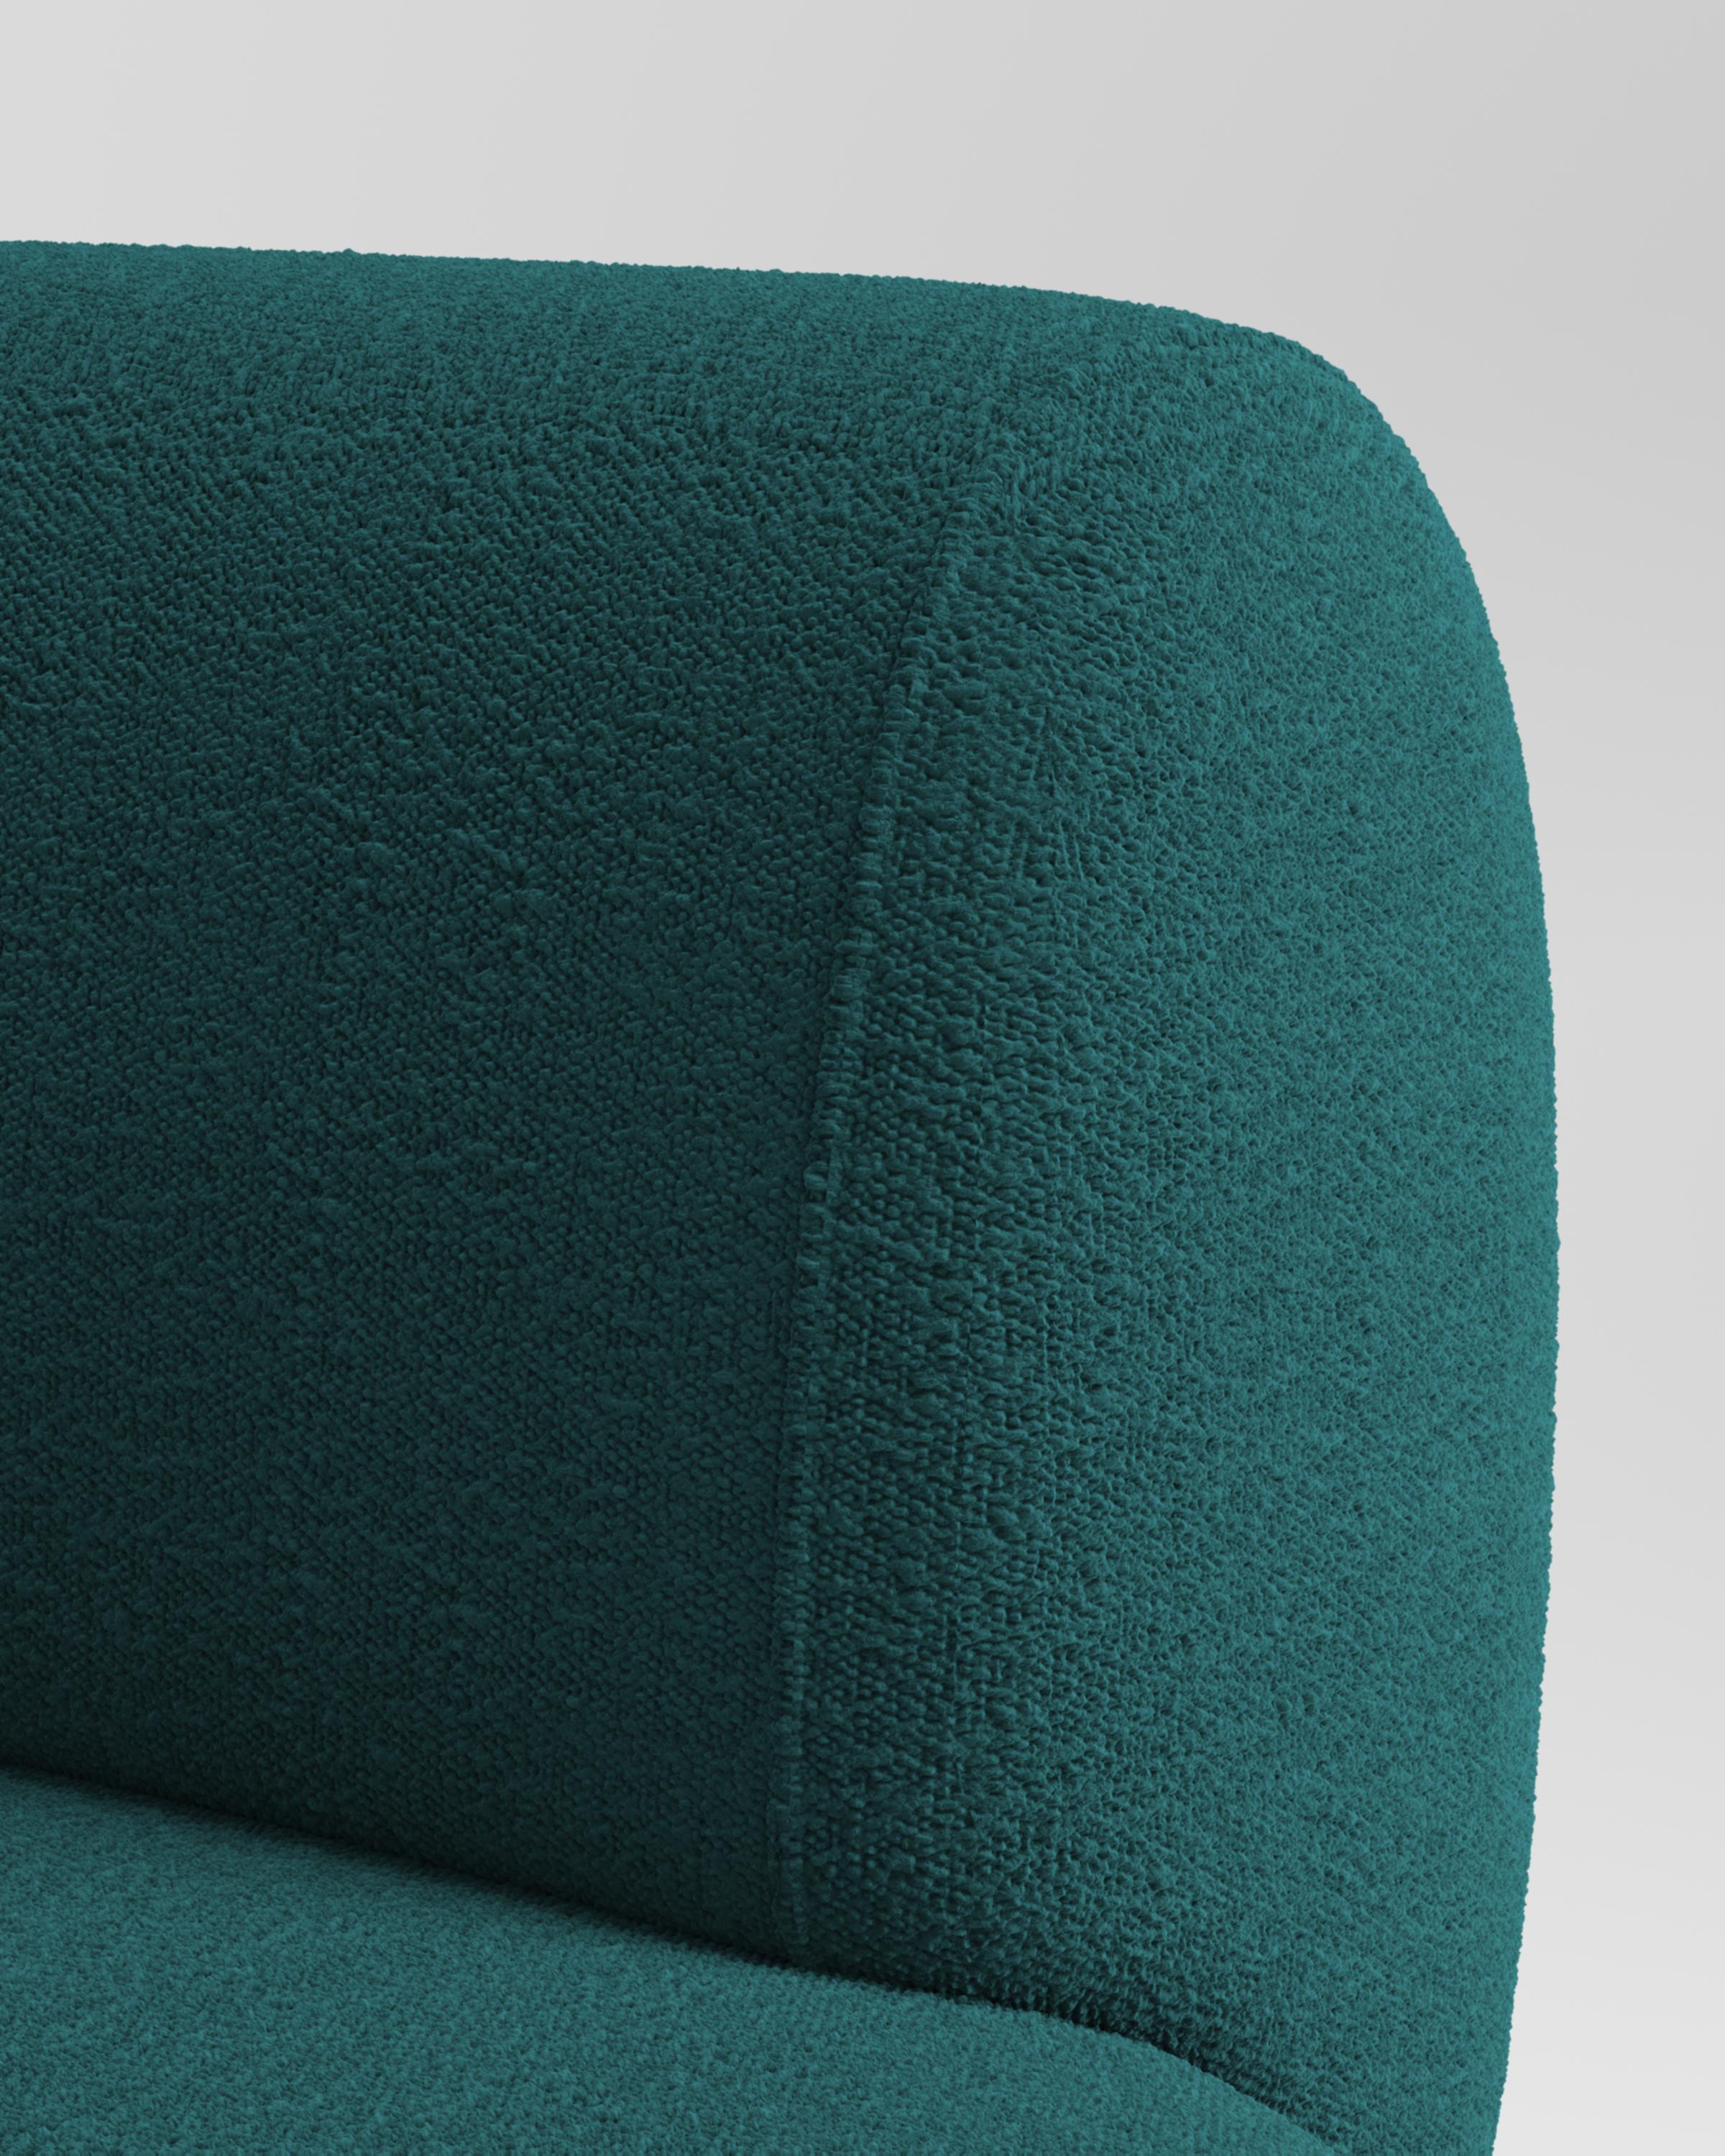 Collector Hug Sofa Designed by Ferrianisbolgi Fabric Boucle Ocean Blue In New Condition For Sale In Castelo da Maia, PT